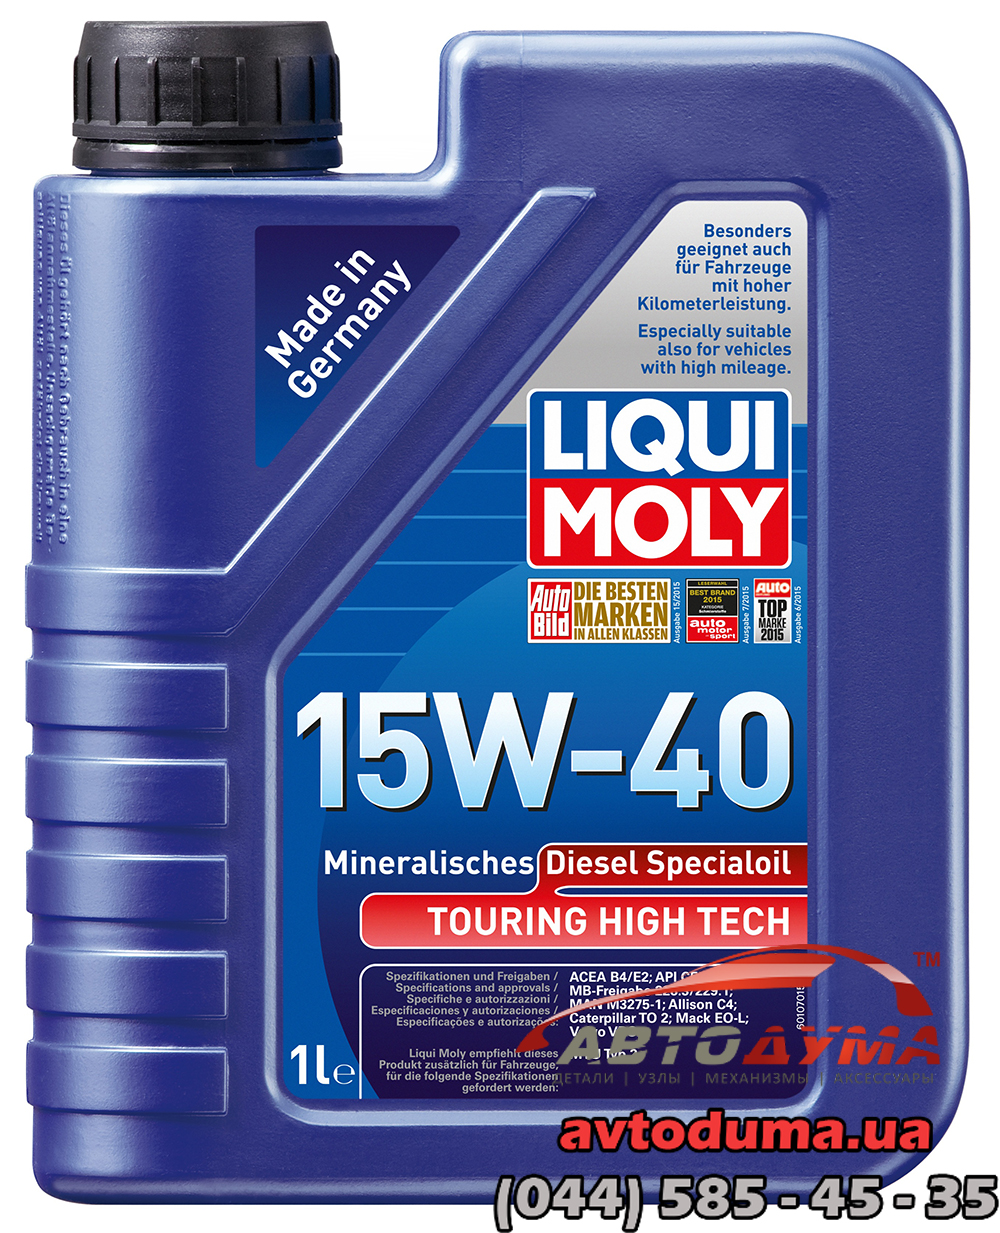 Liqui Moly THT Special Diesel Oil 15W-40, 1л